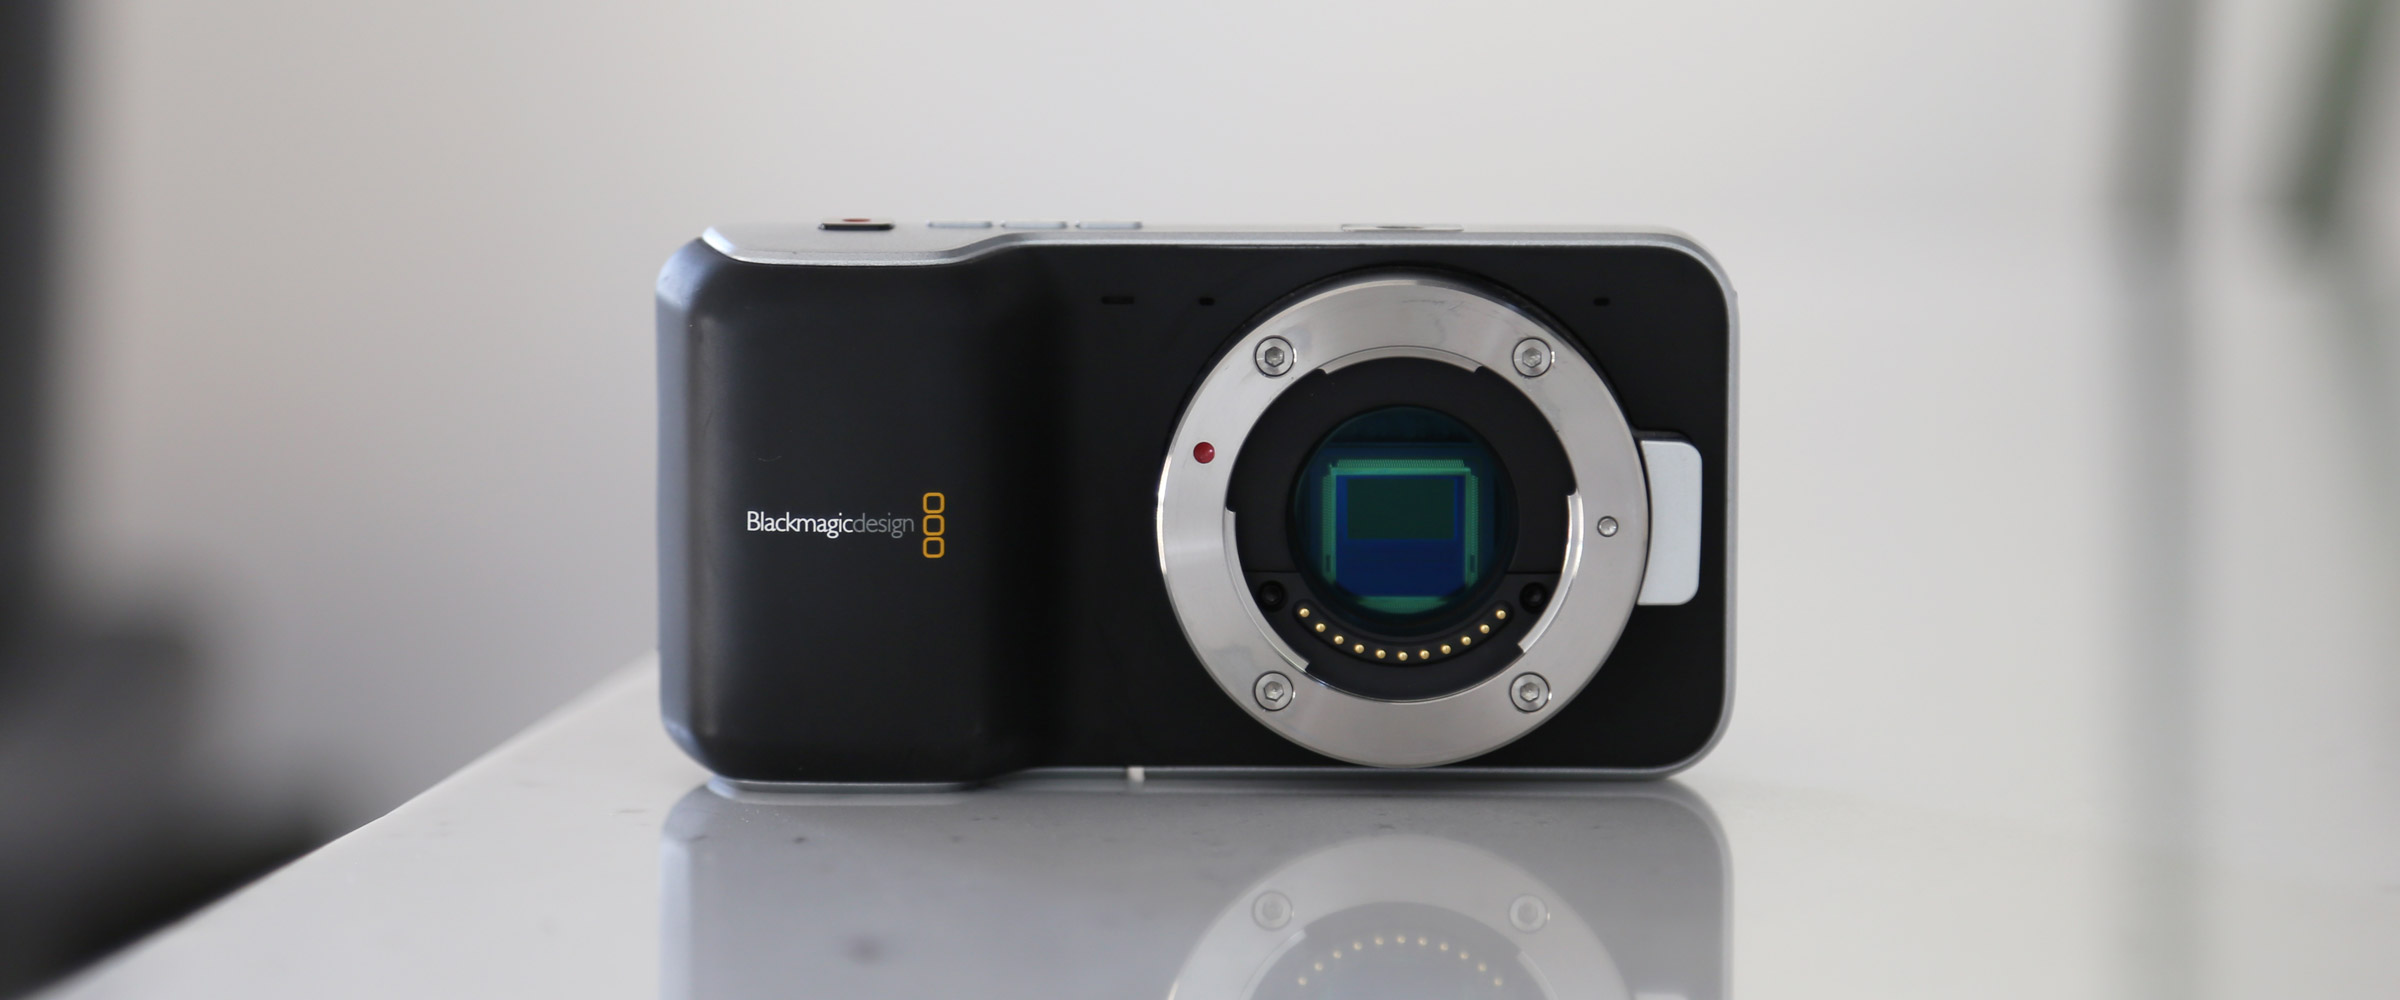 Blackmagic Design HD Pocket Cinema Camera OG ORIGINAL 